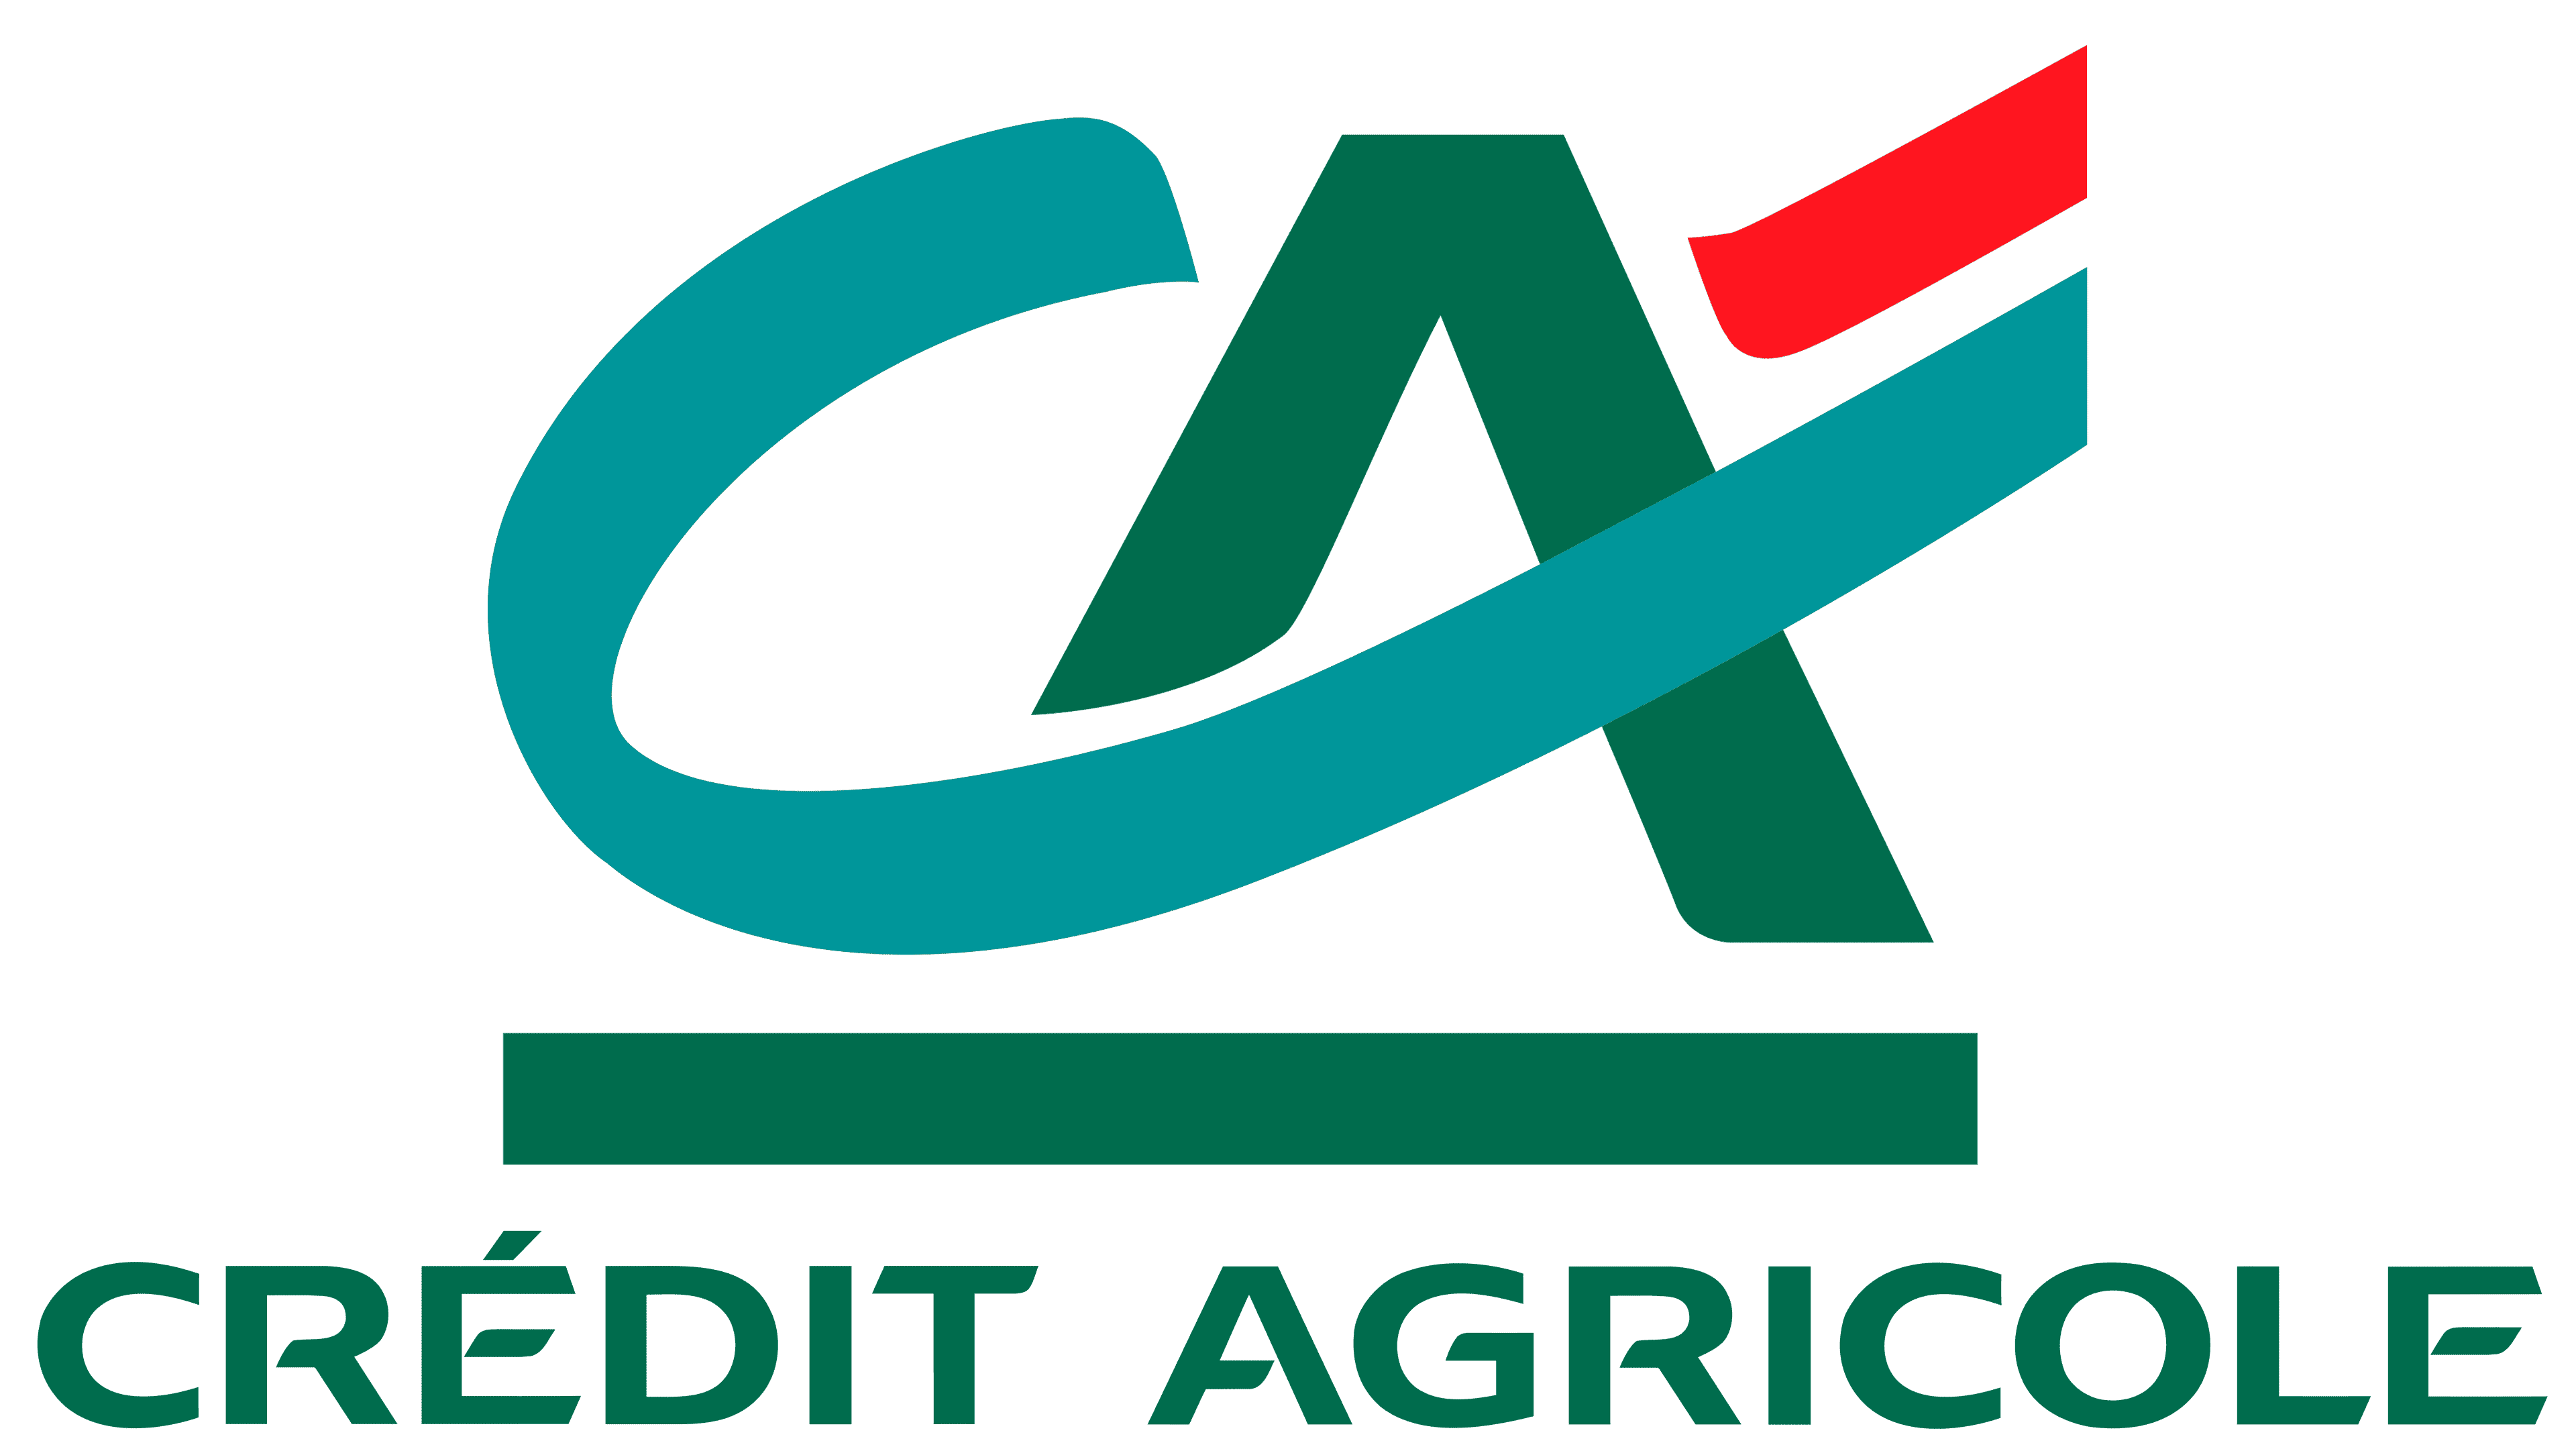 Crédit Agricole Corporate & Investment Bank